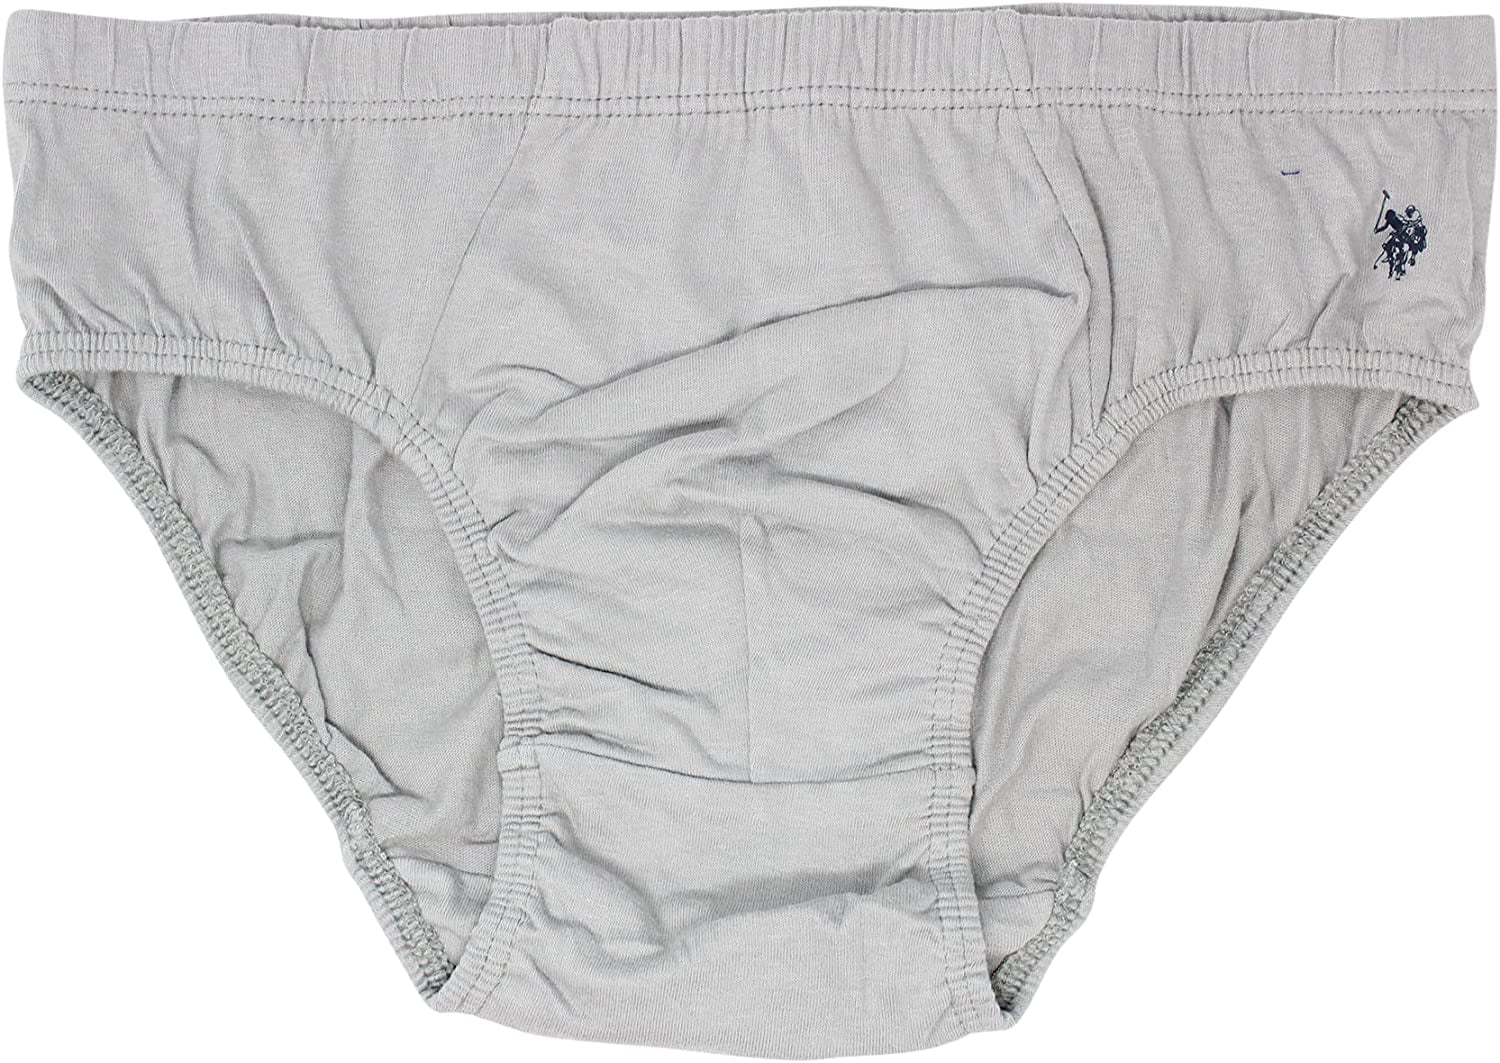 U.S. Polo Assn. Men's Underwear - Low Rise Briefs with Contour Pouch (6  Pack), Size Large, Blue/Medieval Blue/Estate Blue - Yahoo Shopping